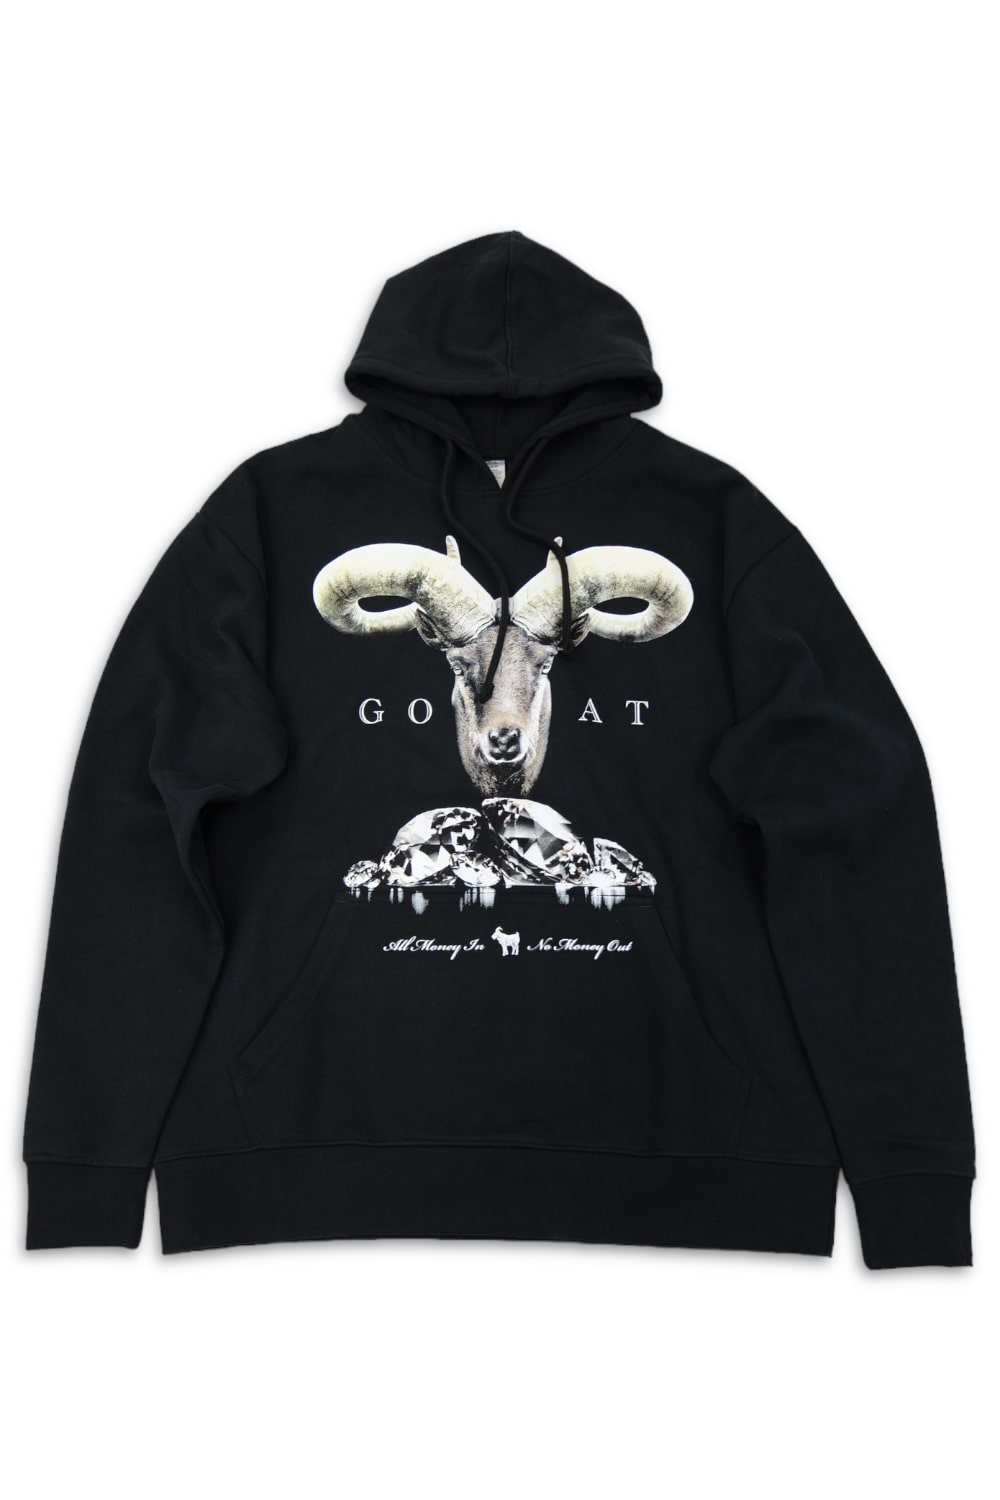 Graphic Hoodie - Goat - Black